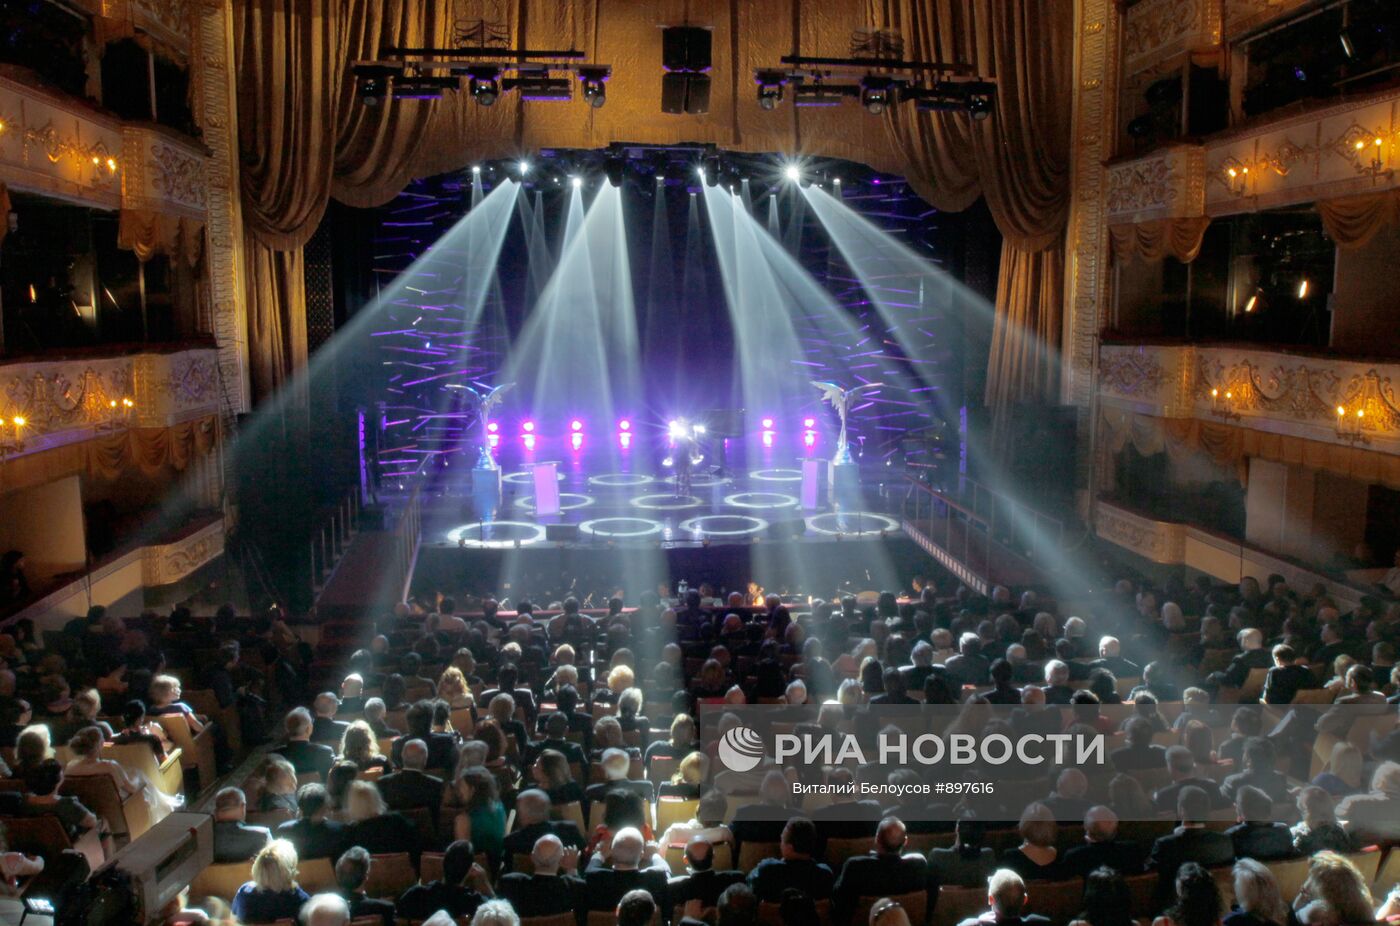 театр оперетты фото схема зала с местами